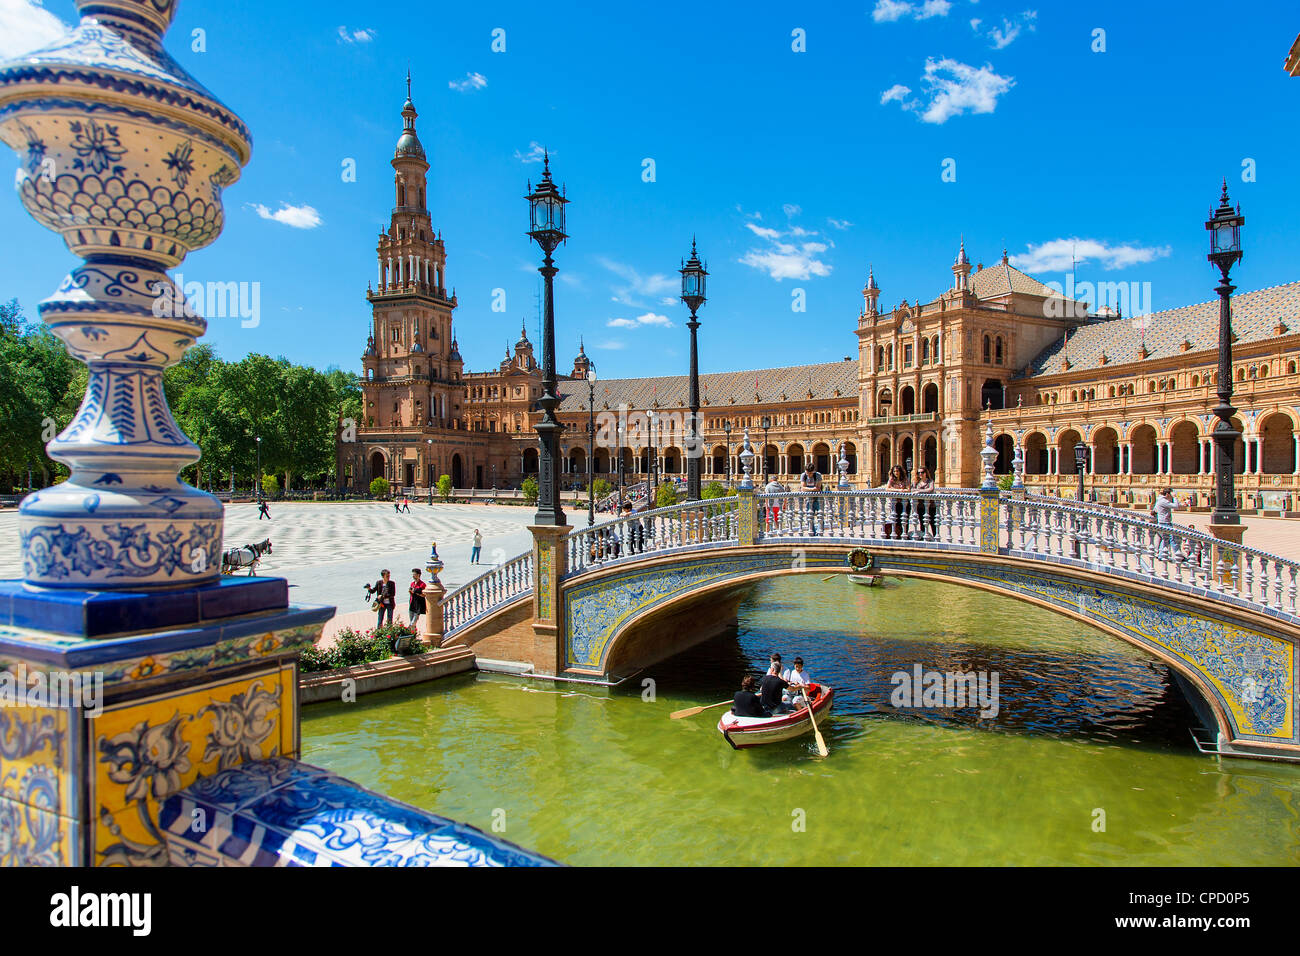 Europa, Spanien Andalusien, Sevilla, Plaza de Espana Stockfoto